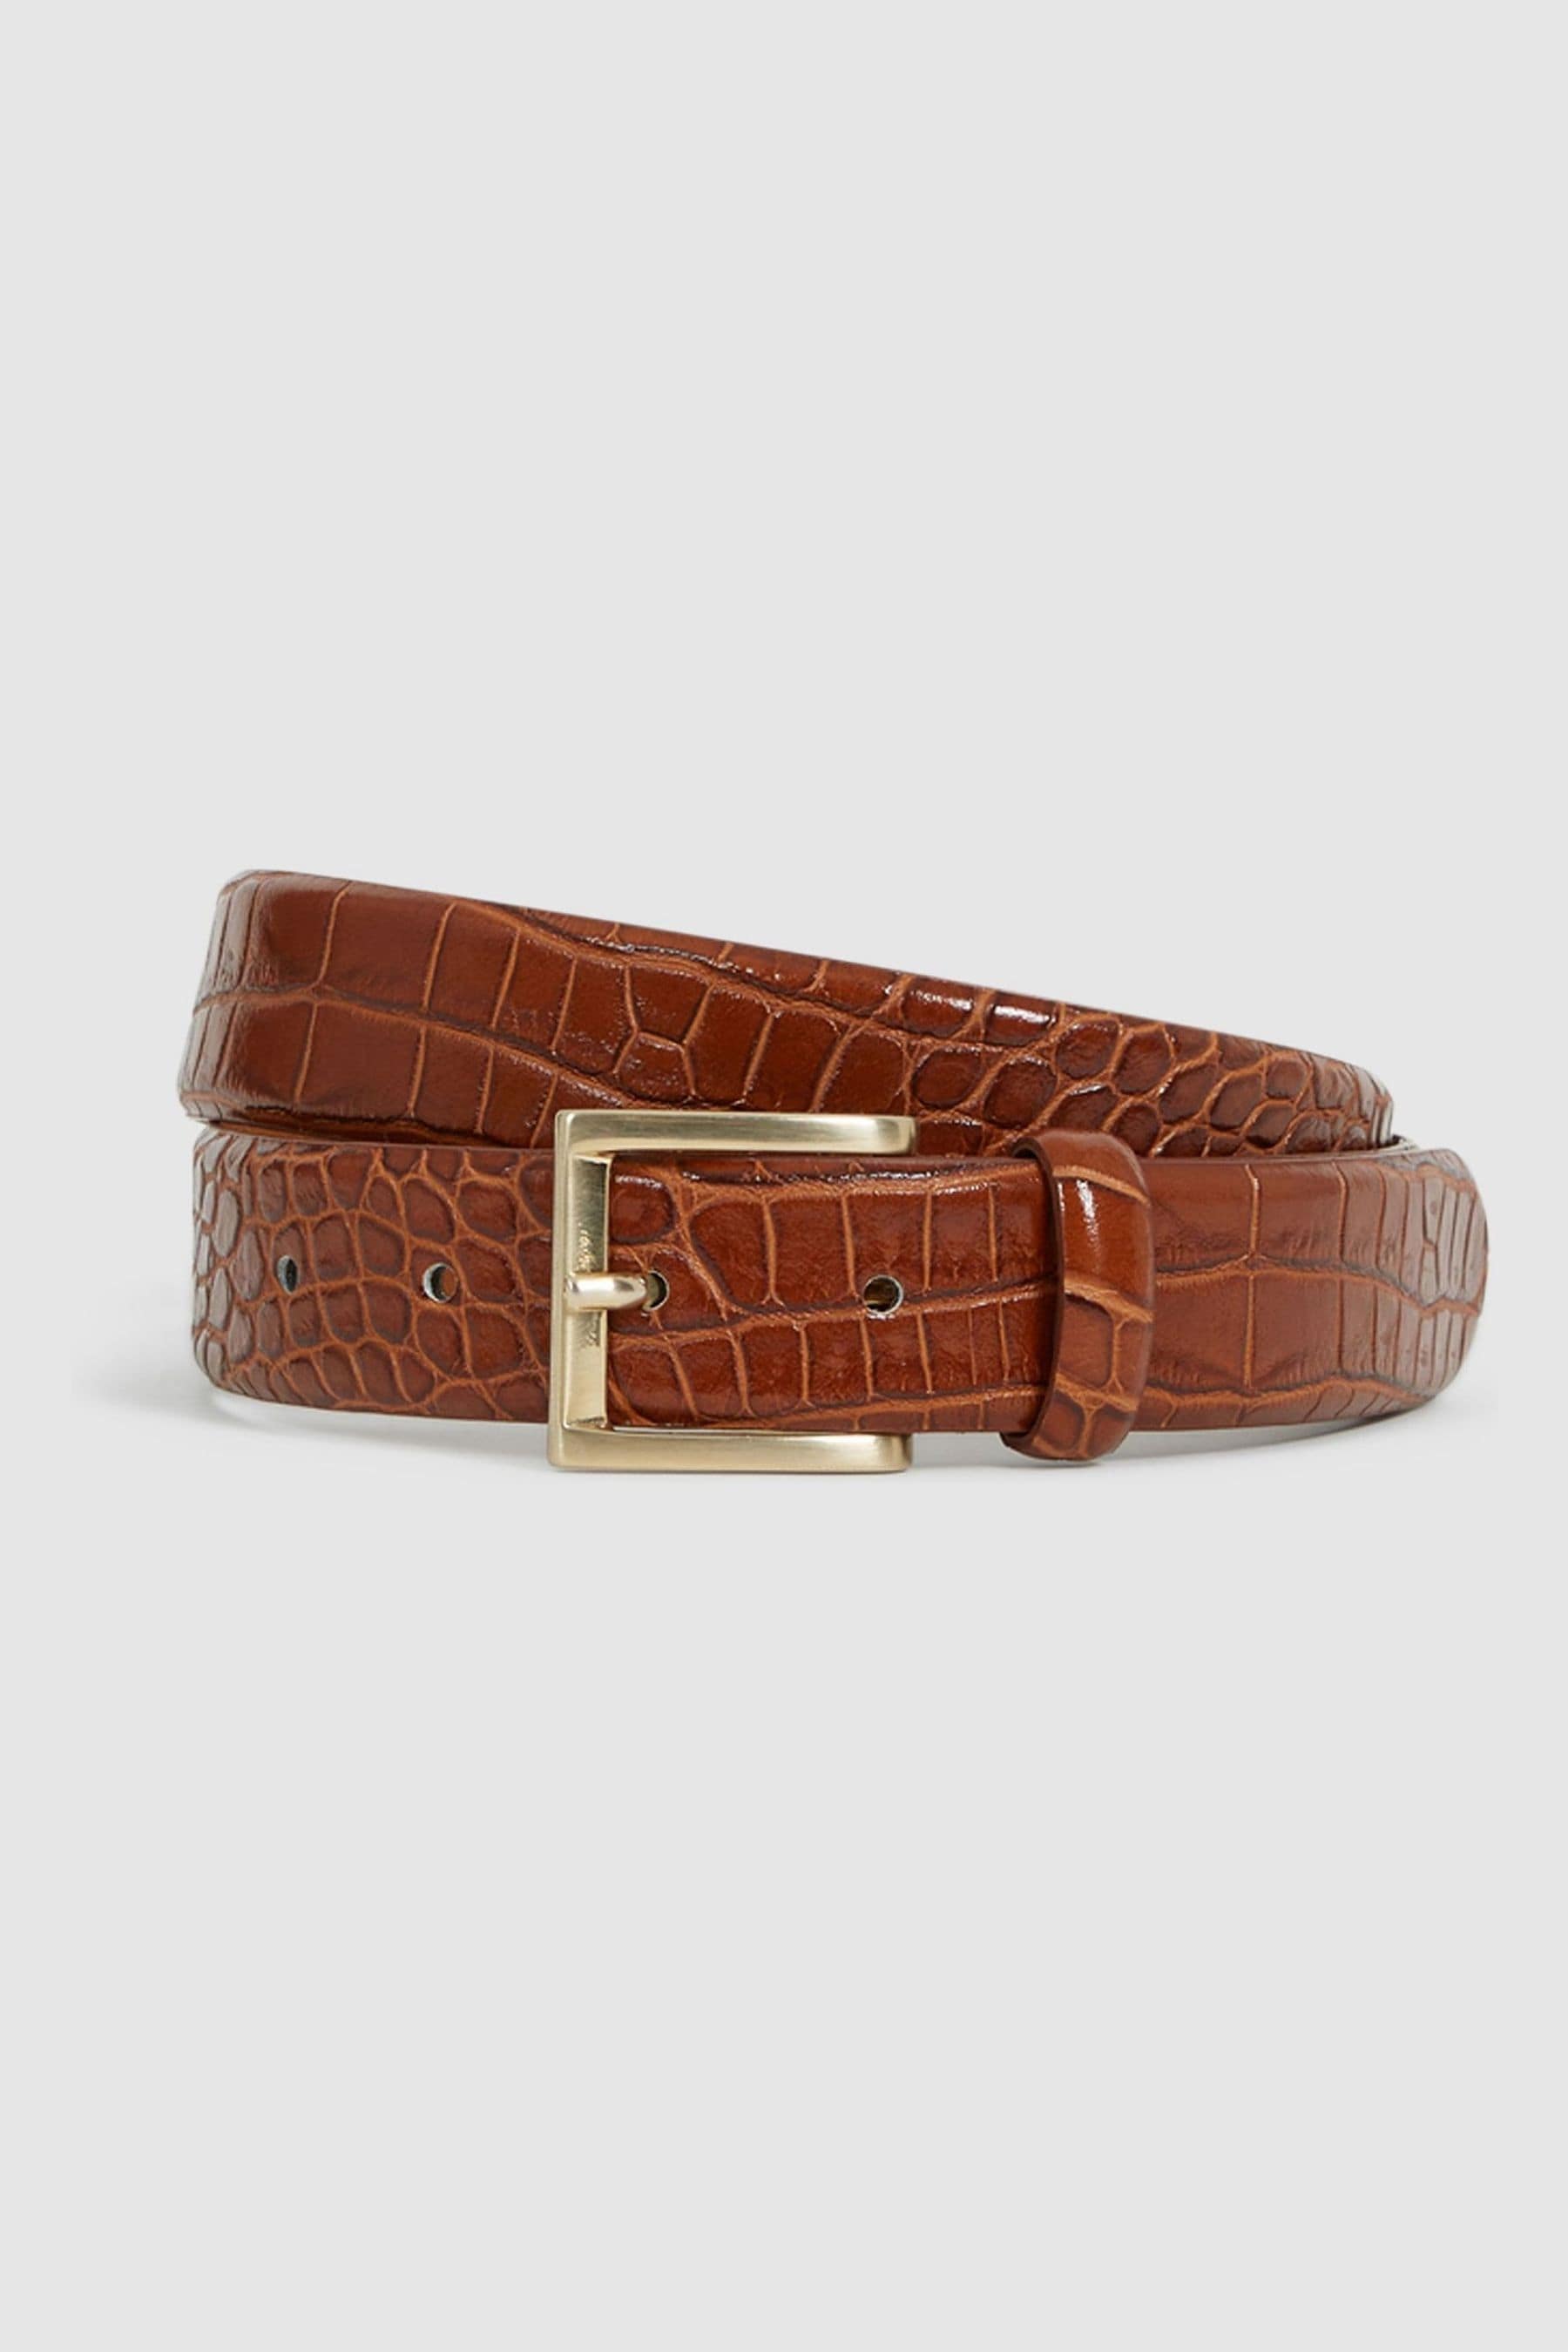 Albany - Tan Leather Belt